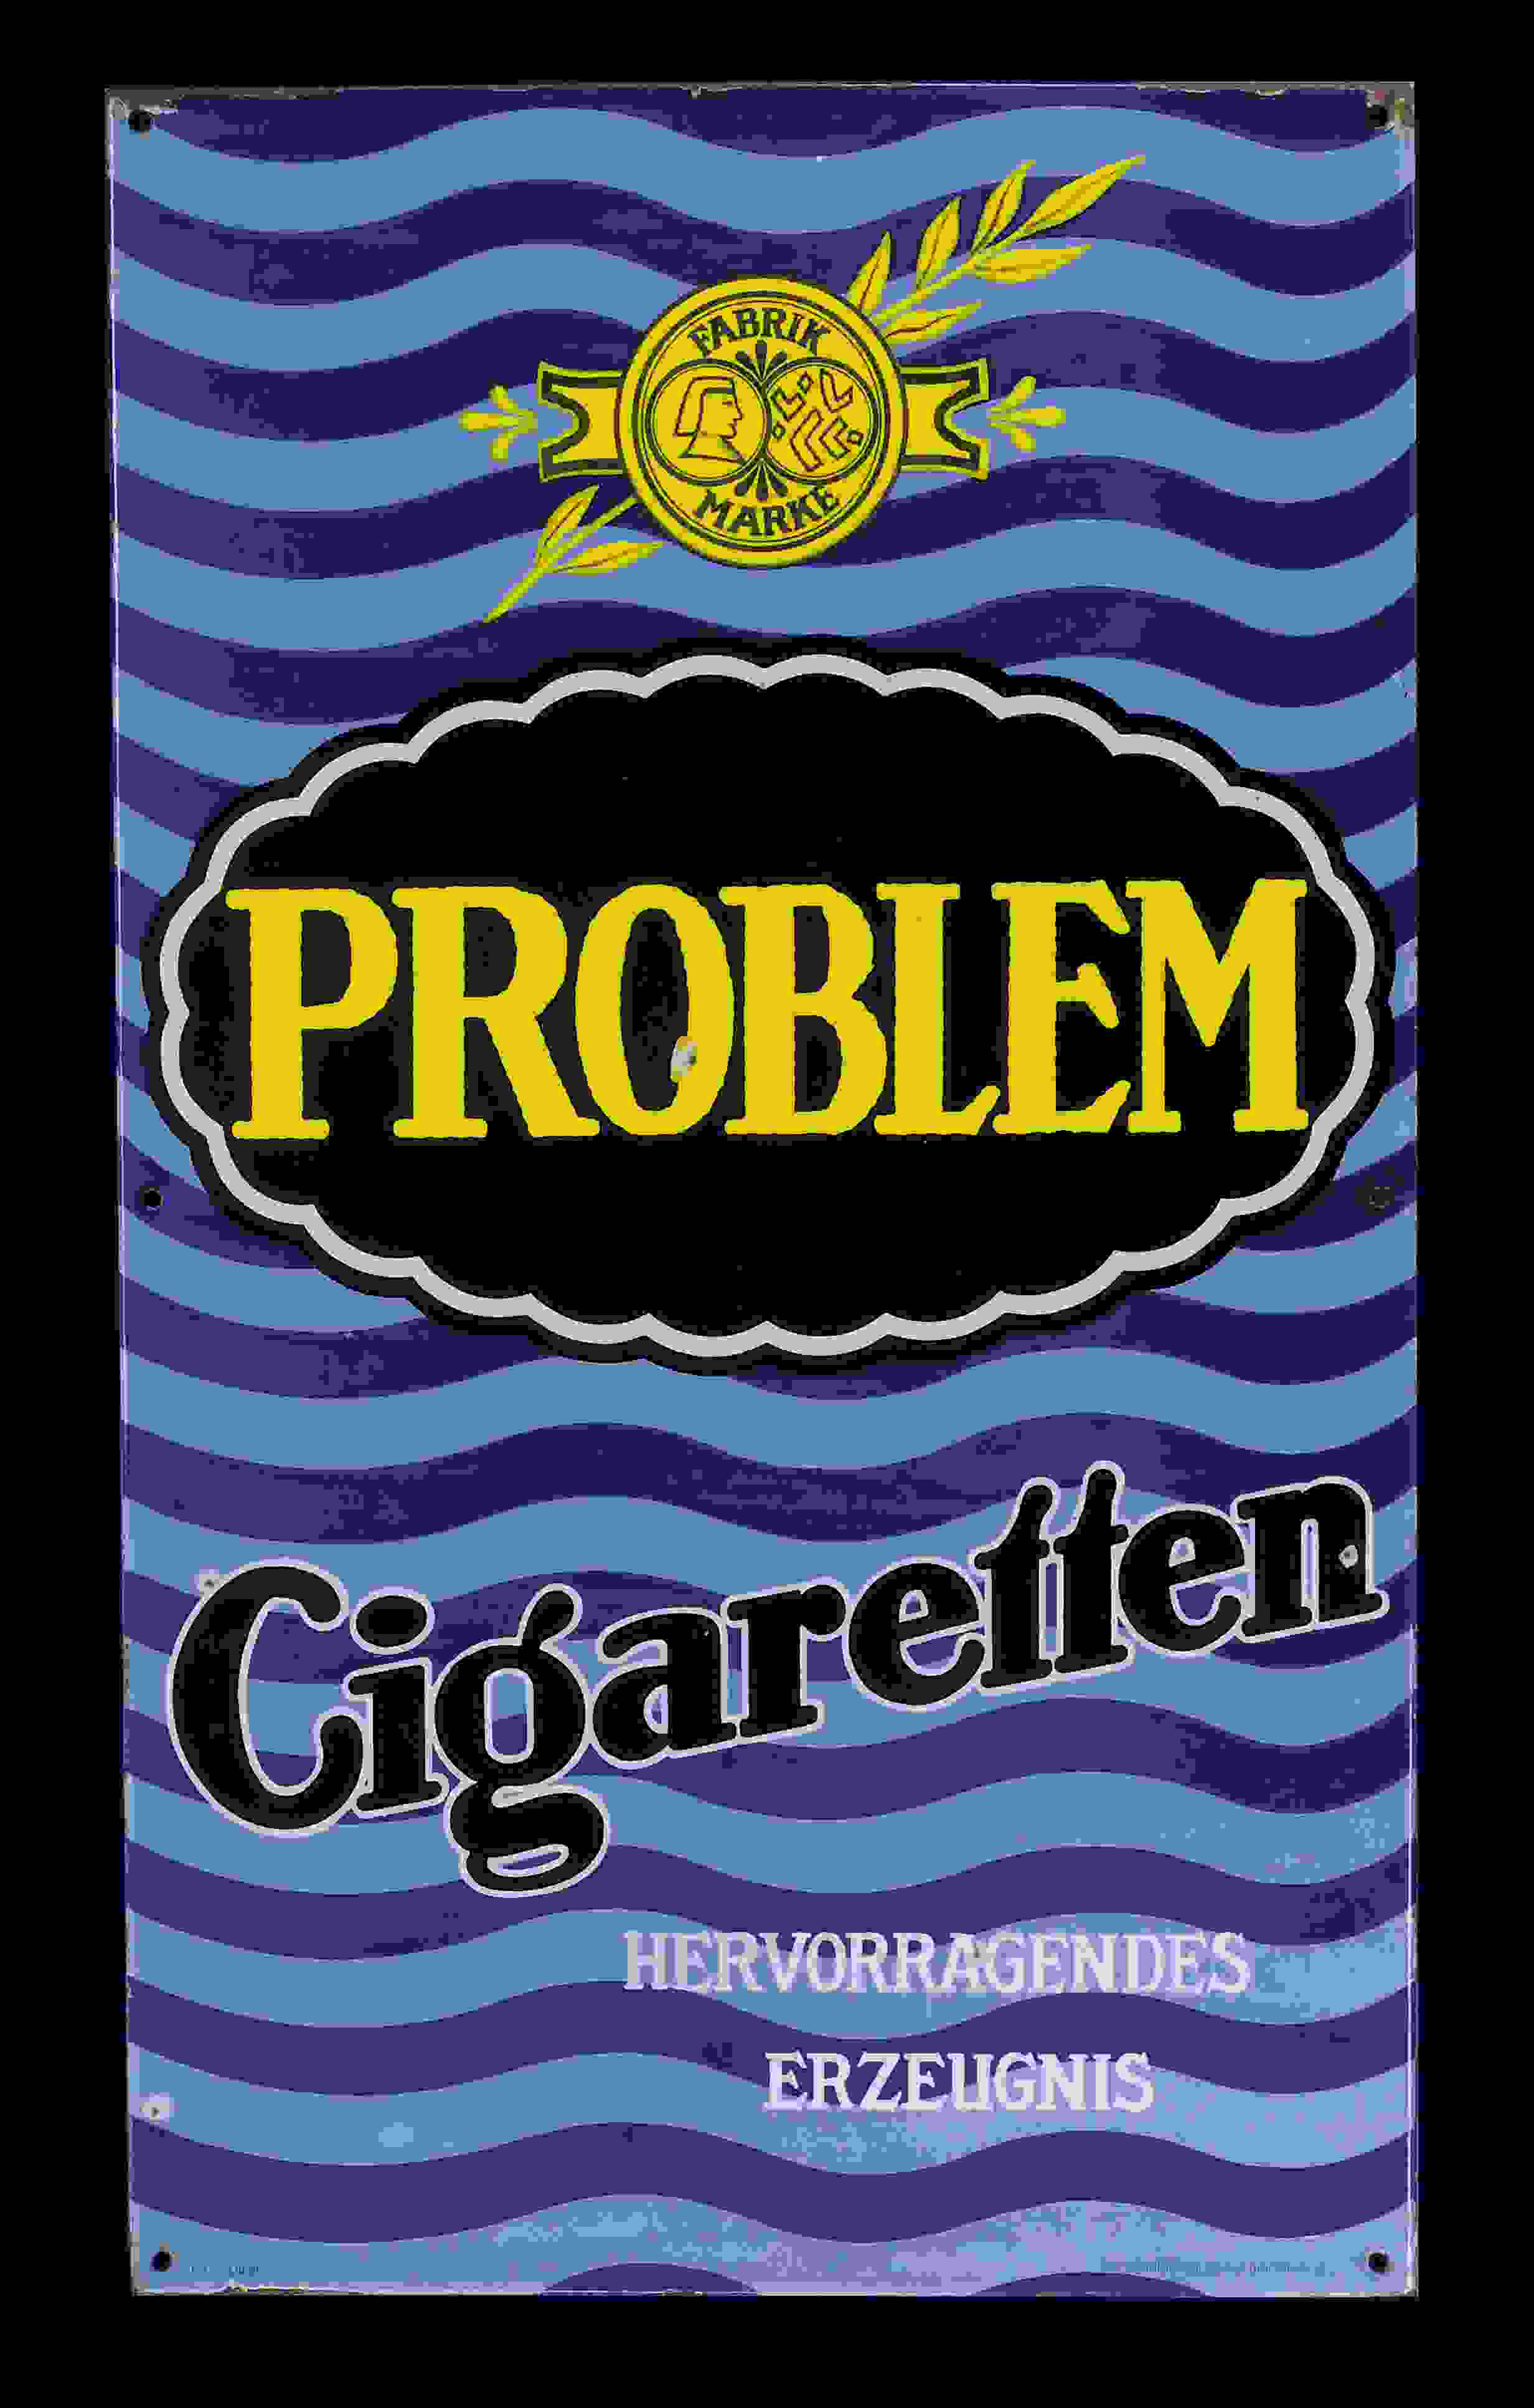 Problem Cigaretten 